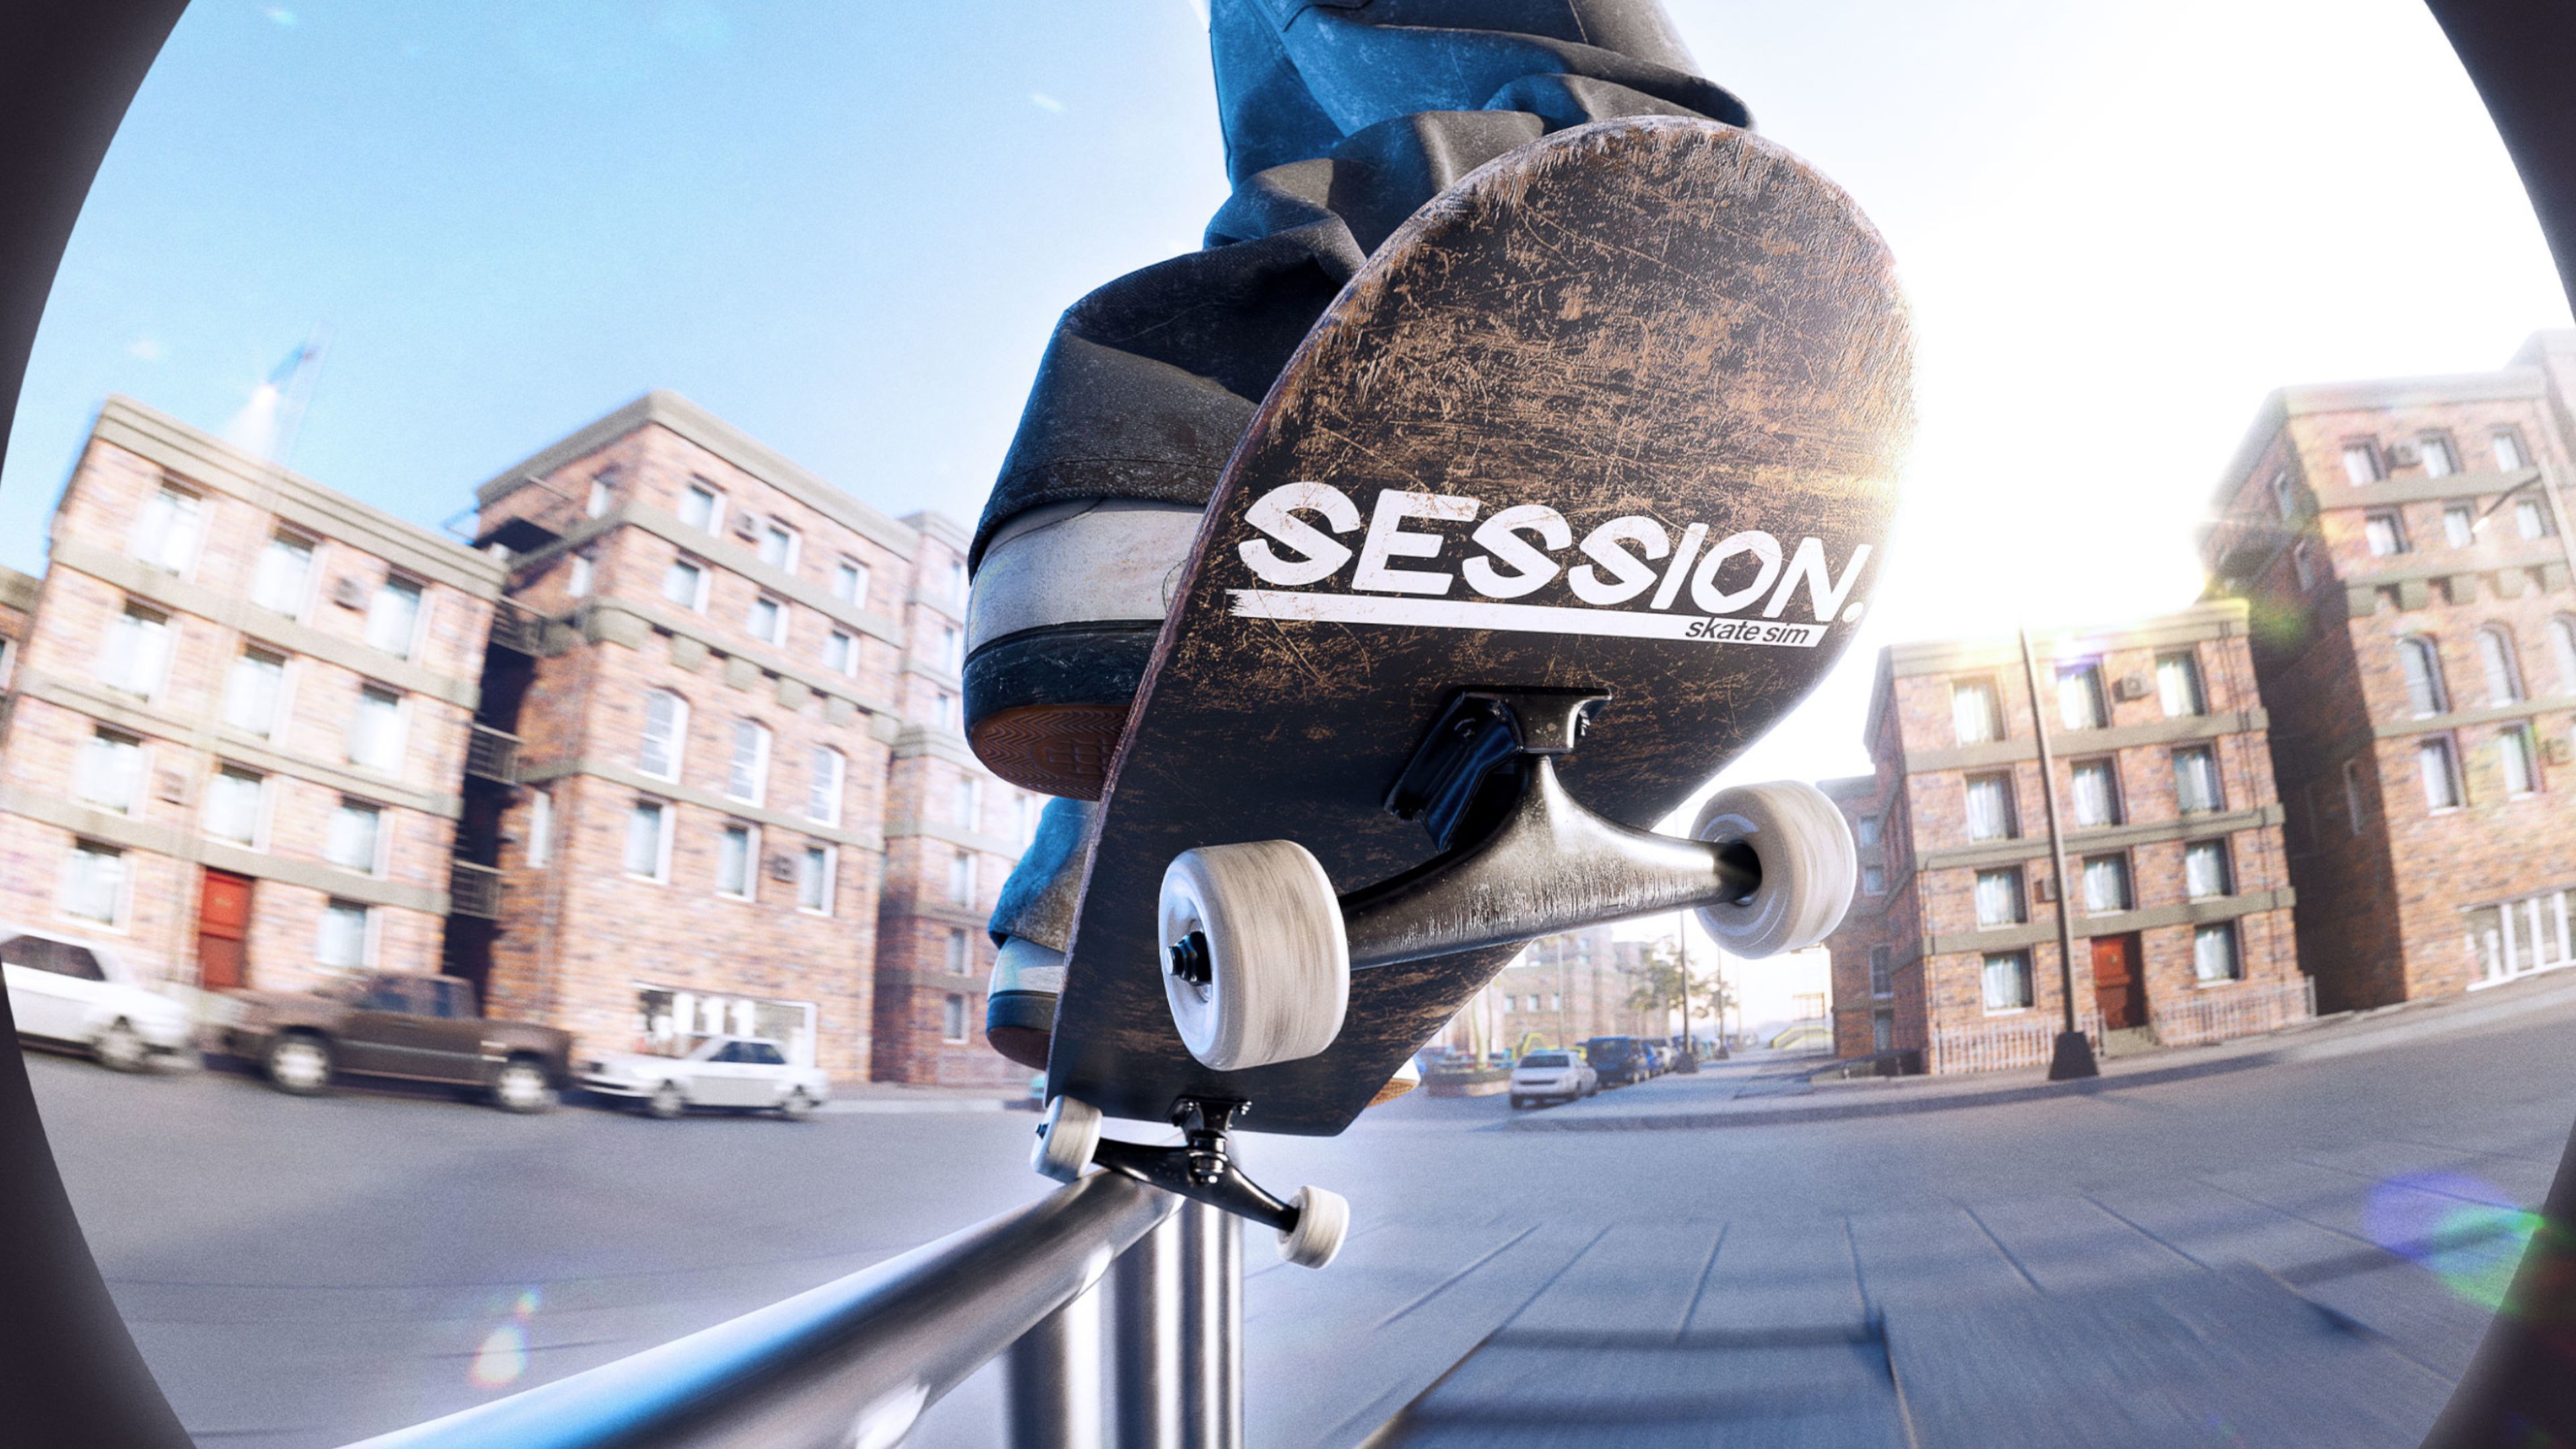 Session Skate Sim